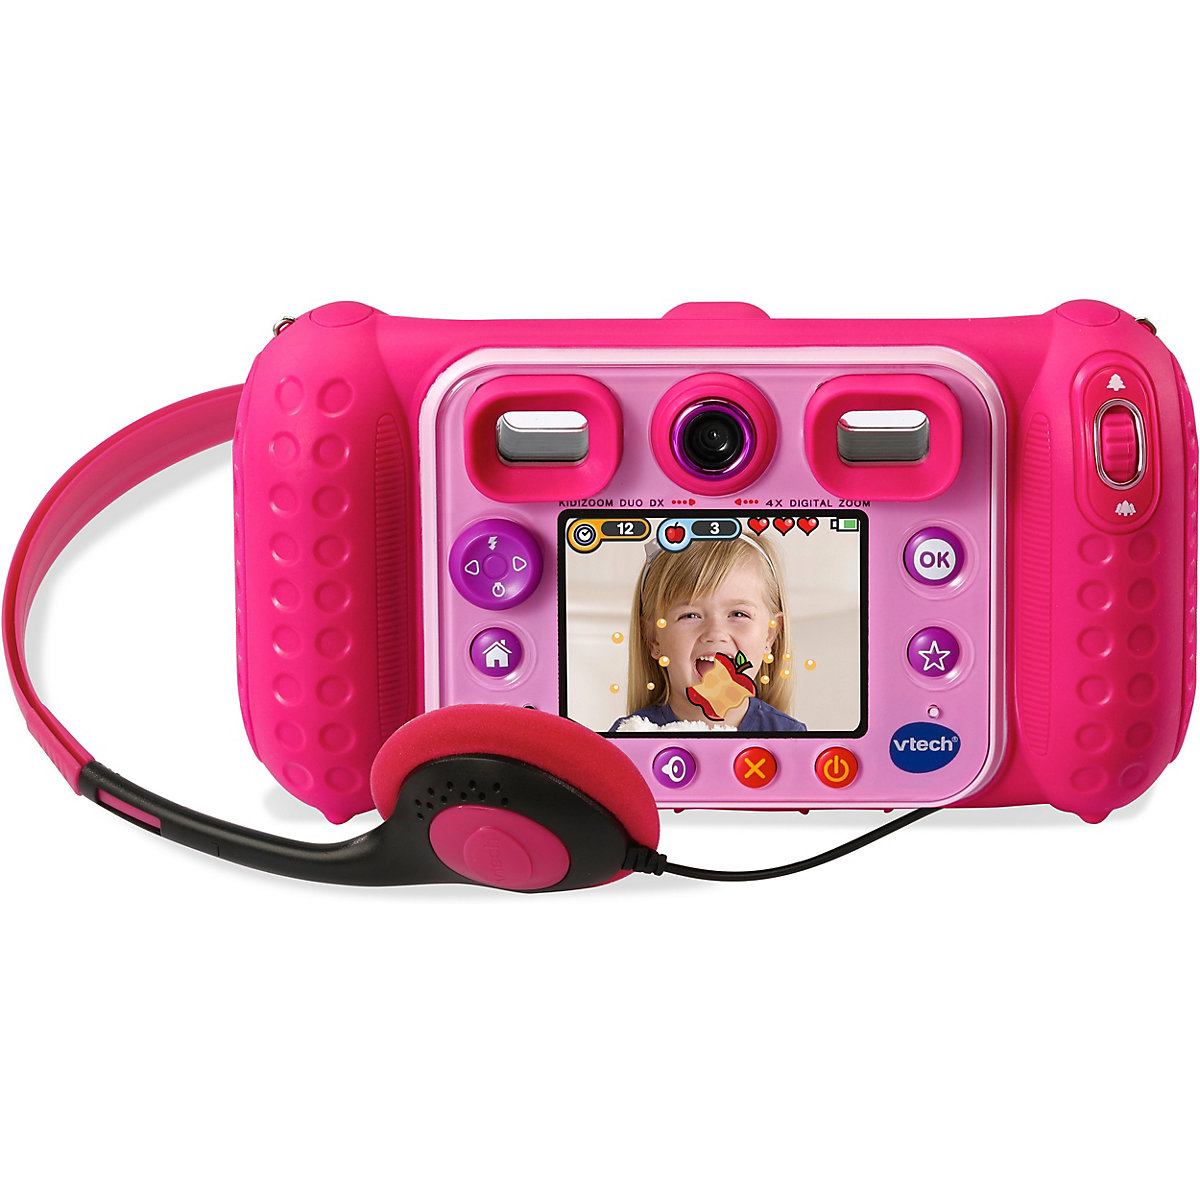 Vtech Kidizoom Duo 5.0MPX Camera Pink fr версия. Камера игрового телефона